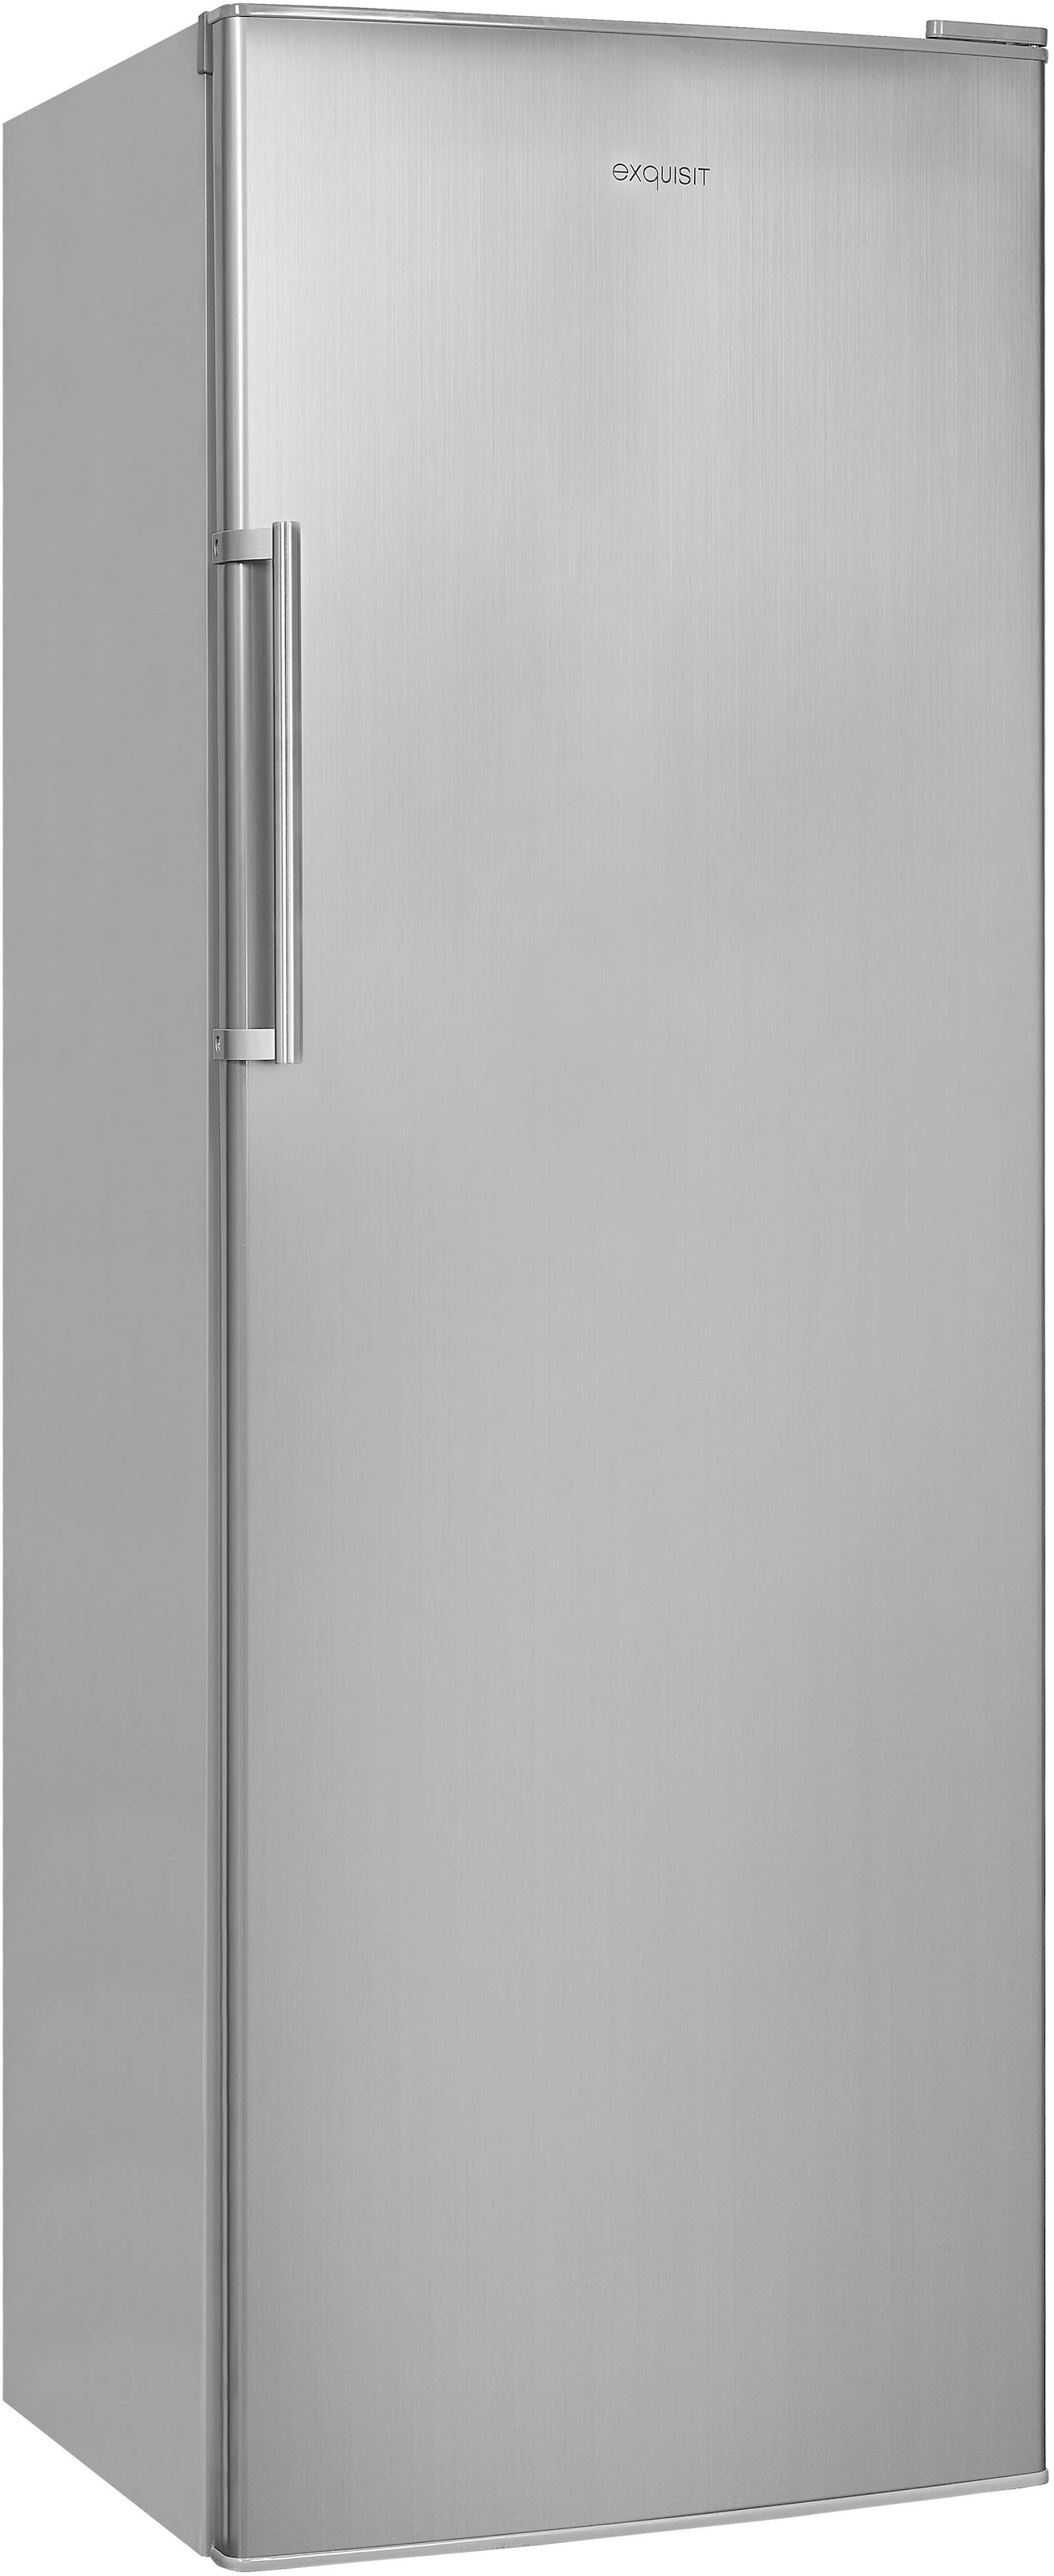 exquisit Vollraumkühlschrank »KS350-V-H-040D weiss«, KS350-V-H-040D inoxlook, 171,5 cm hoch, 60 cm breit